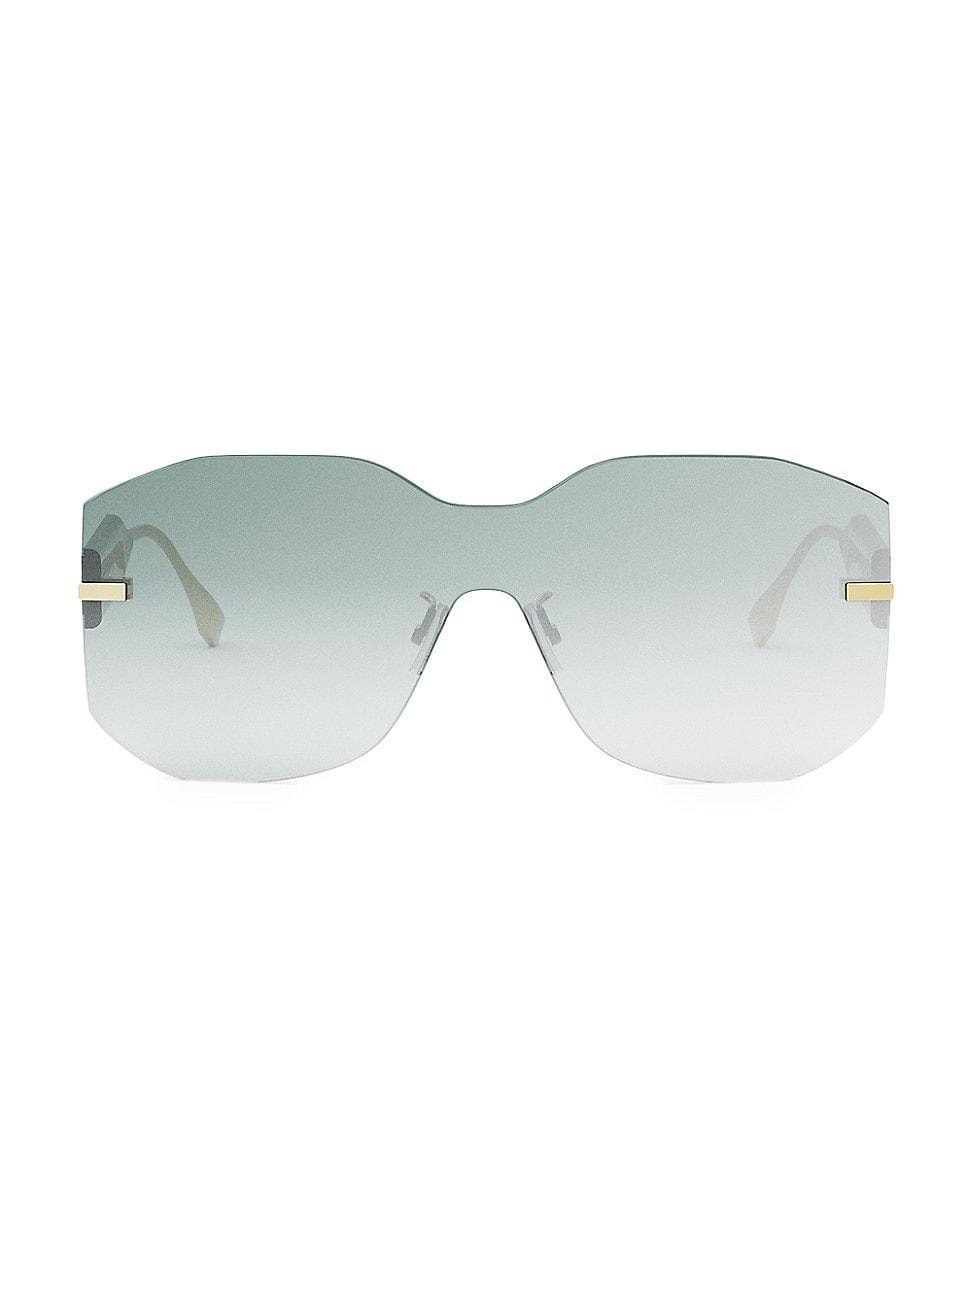 Mens Fendi Roma 53MM Rectangular Sunglasses Product Image